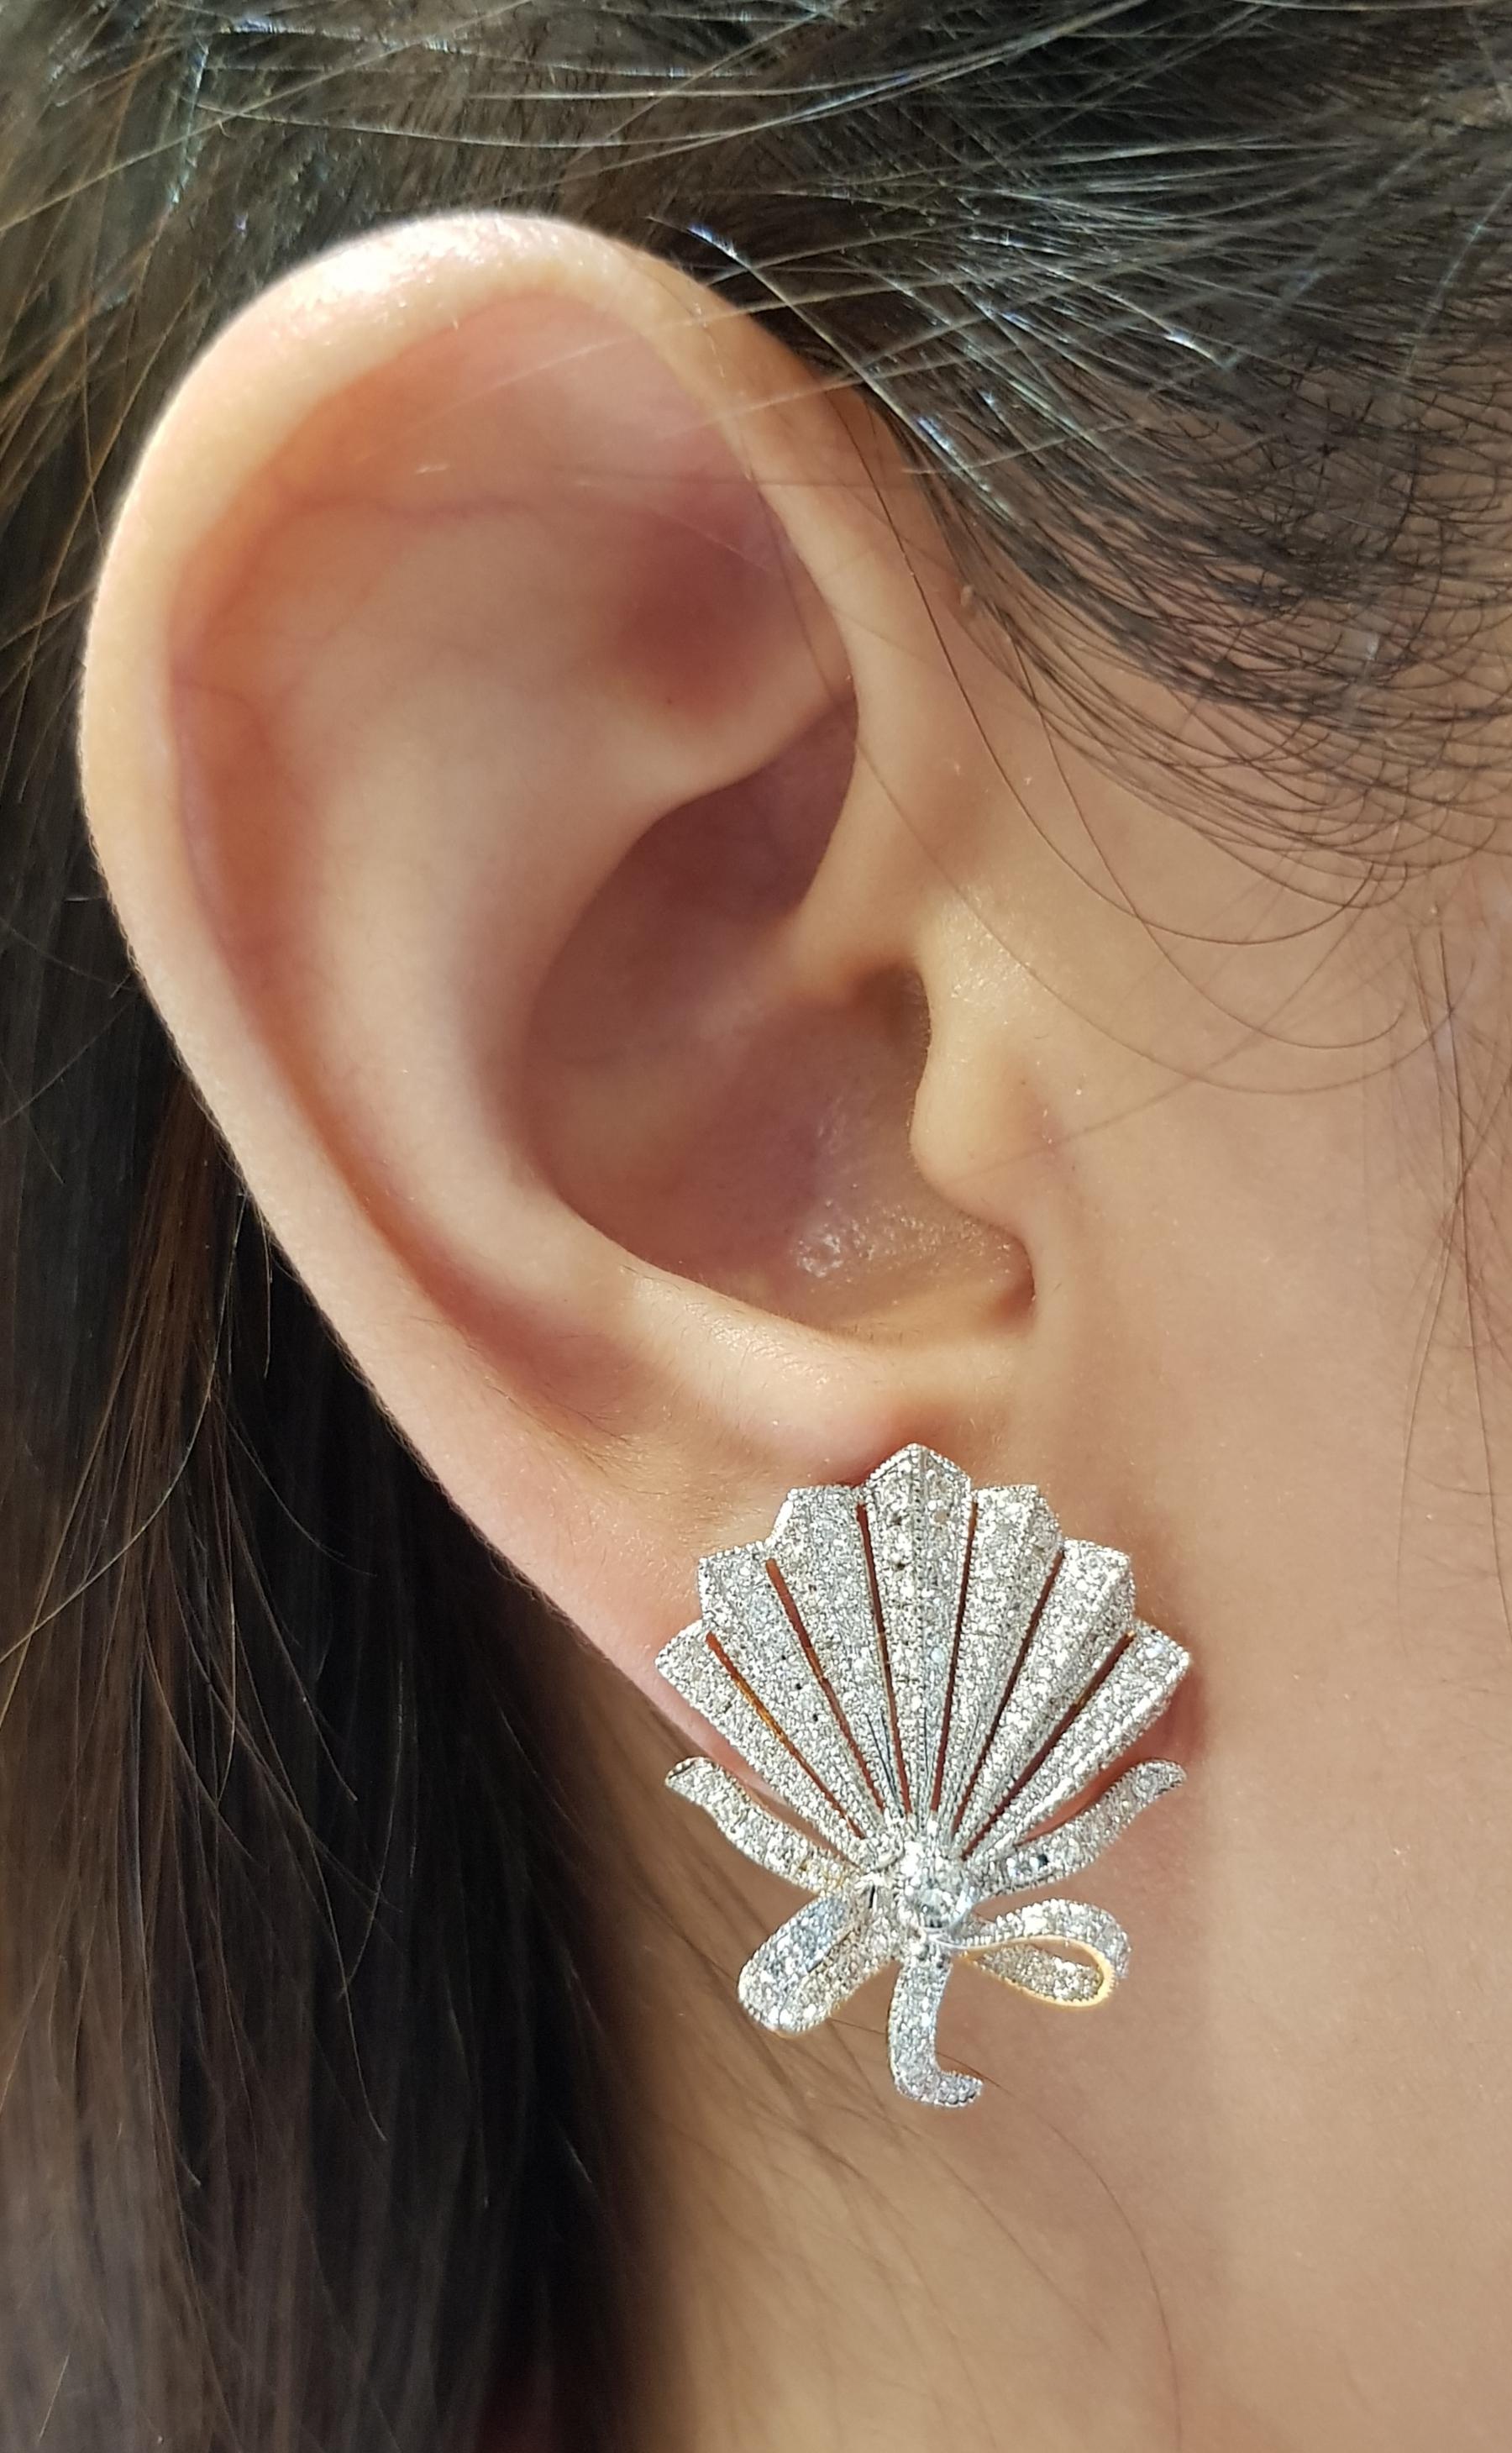 Diamond 1.50 carats Earrings set in 18 Karat Gold Settings

Width:  2.3 cm 
Length:  2.5 cm
Total Weight: 10.13 grams

